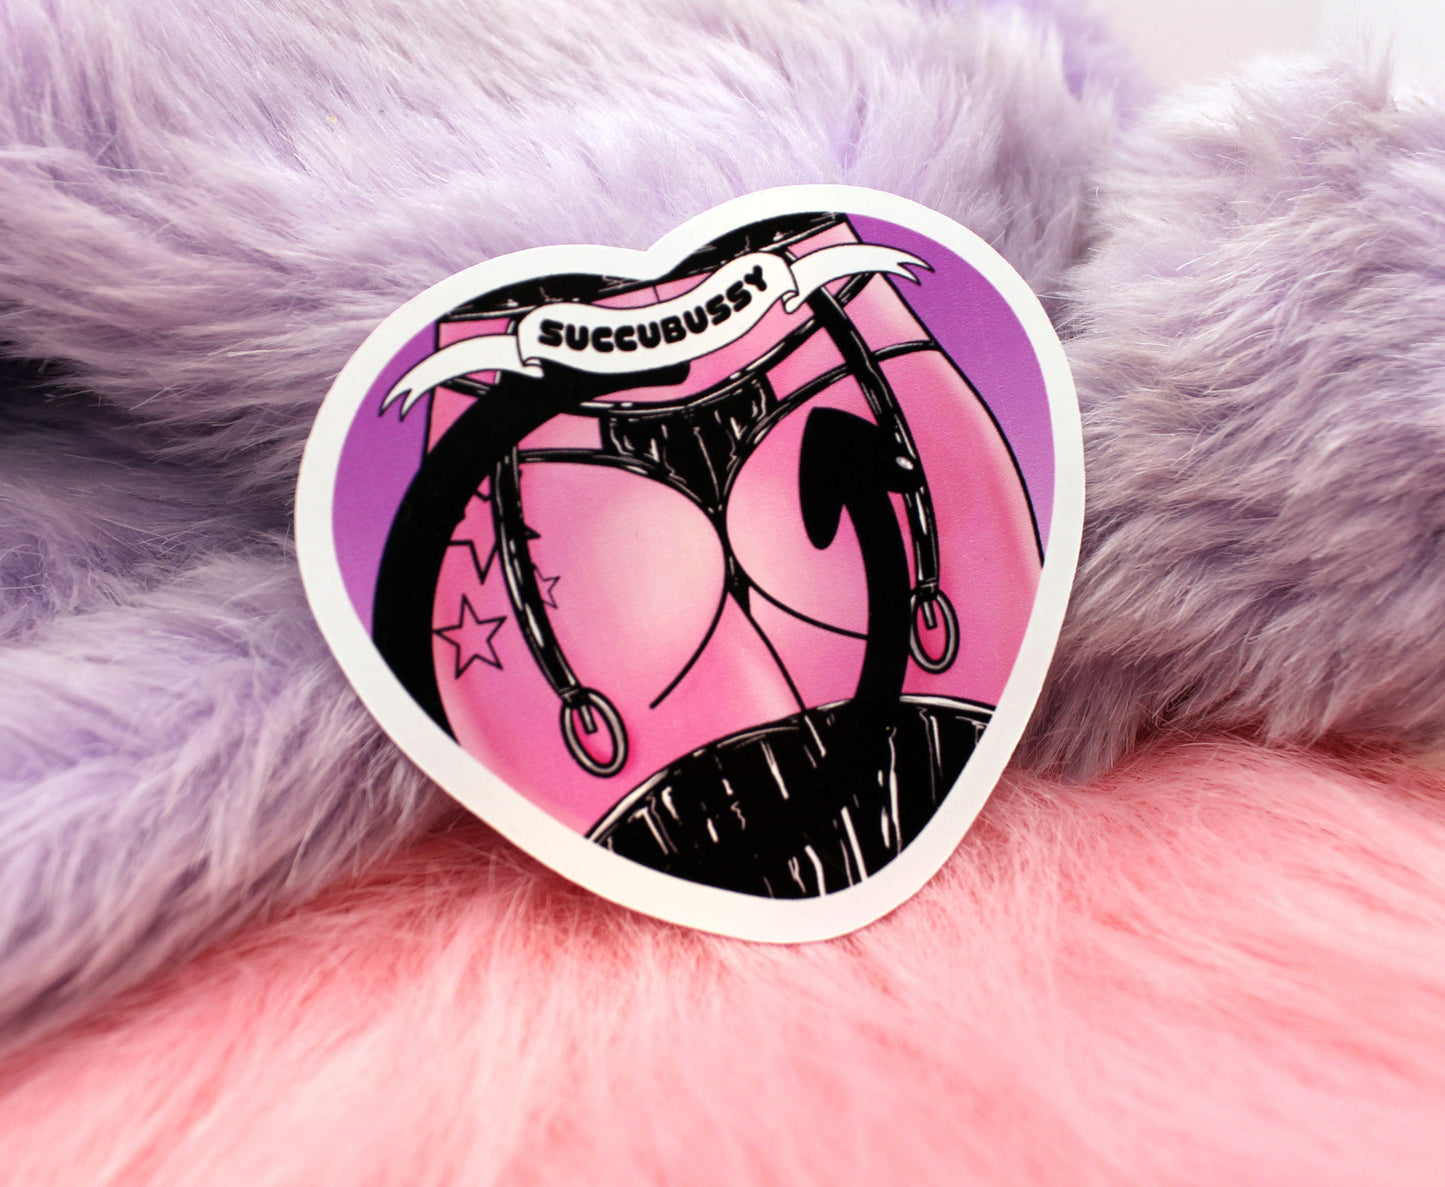 Succubussy Heart Sticker (55mm) - Demon Lingerie Pin-Up